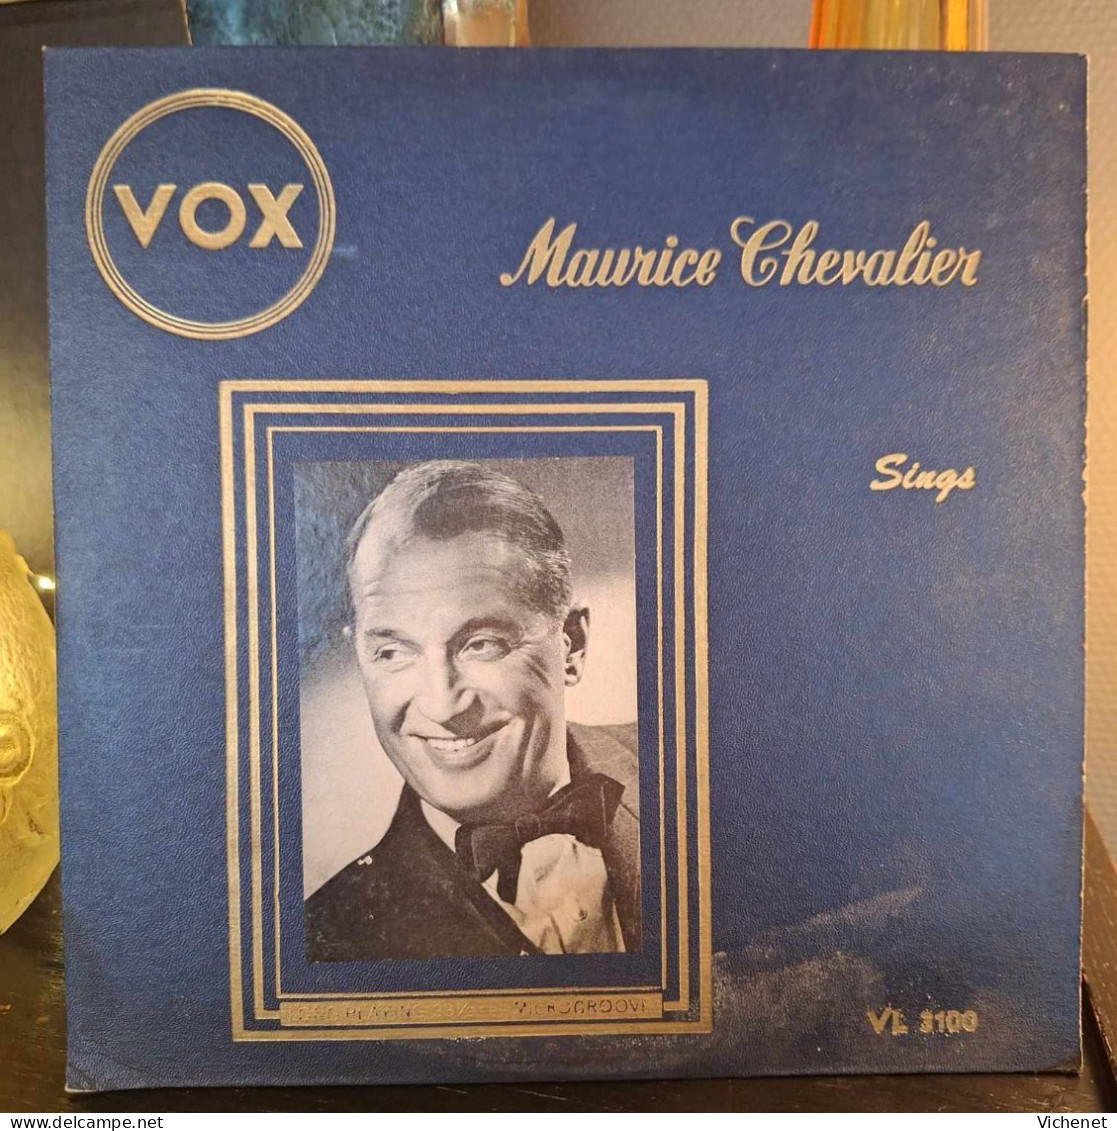 Maurice Chevalier - Maurice Chevalier Sings - 25 Cm - Formats Spéciaux